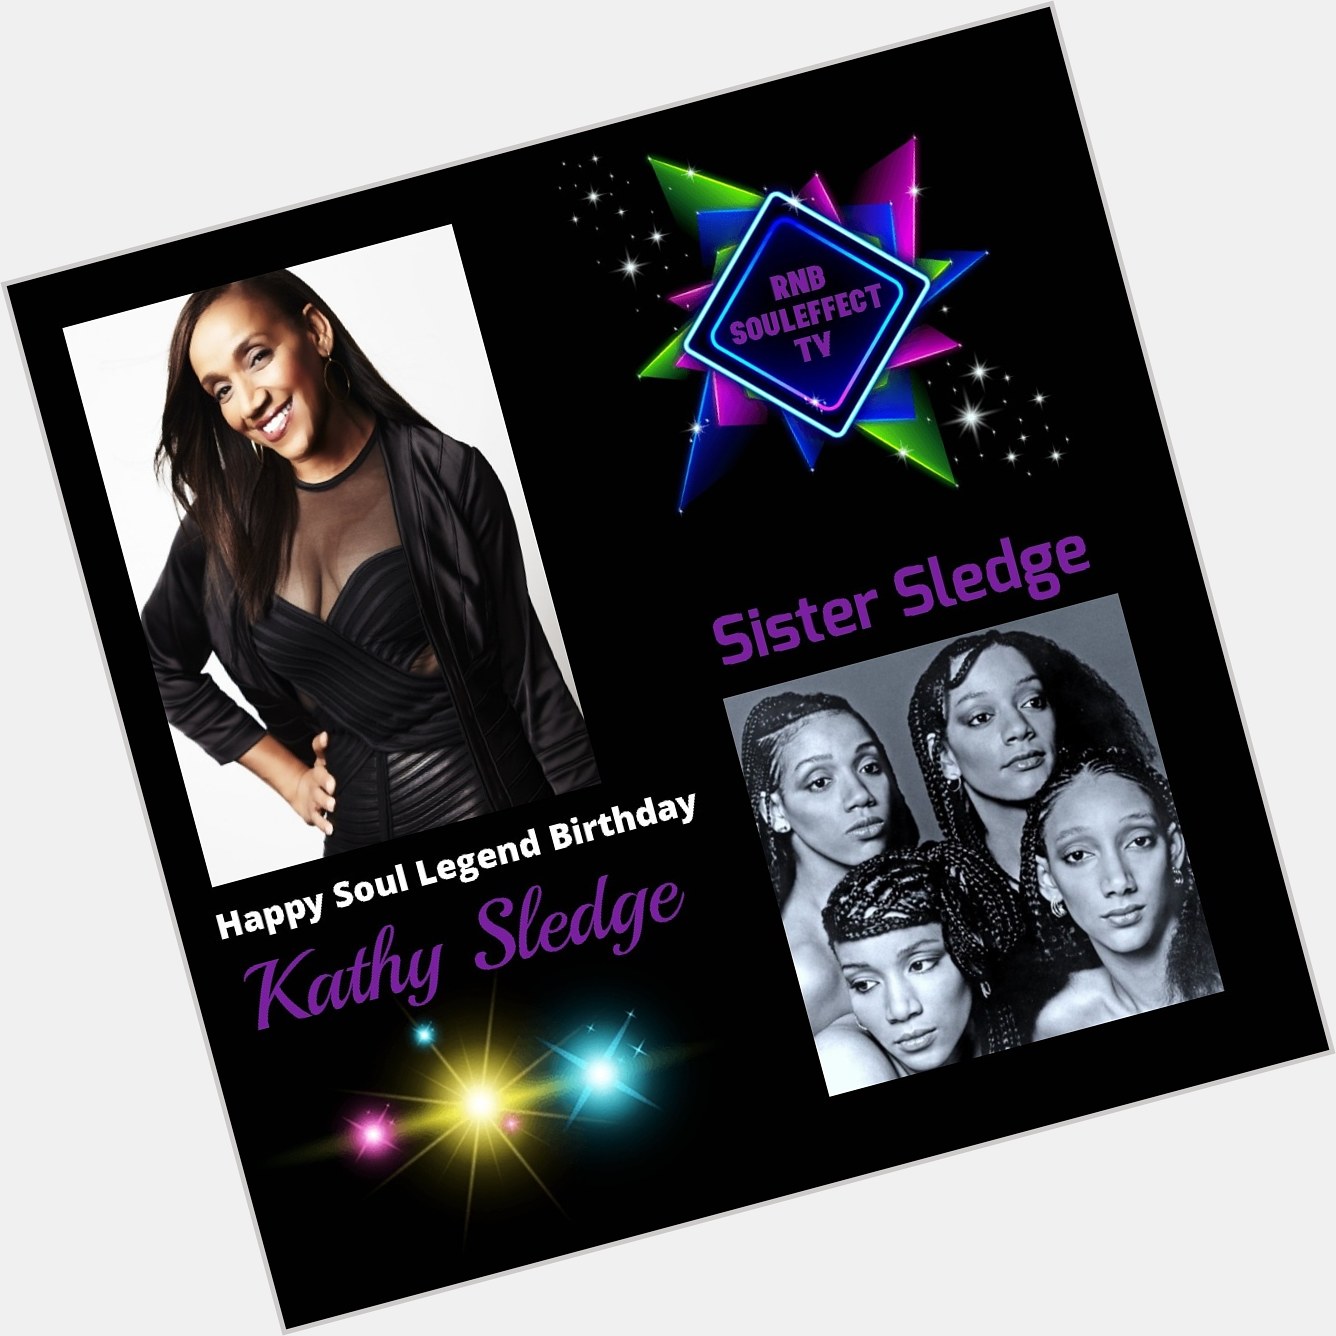 Happy Soul Legend Birthday Kathy Sledge       